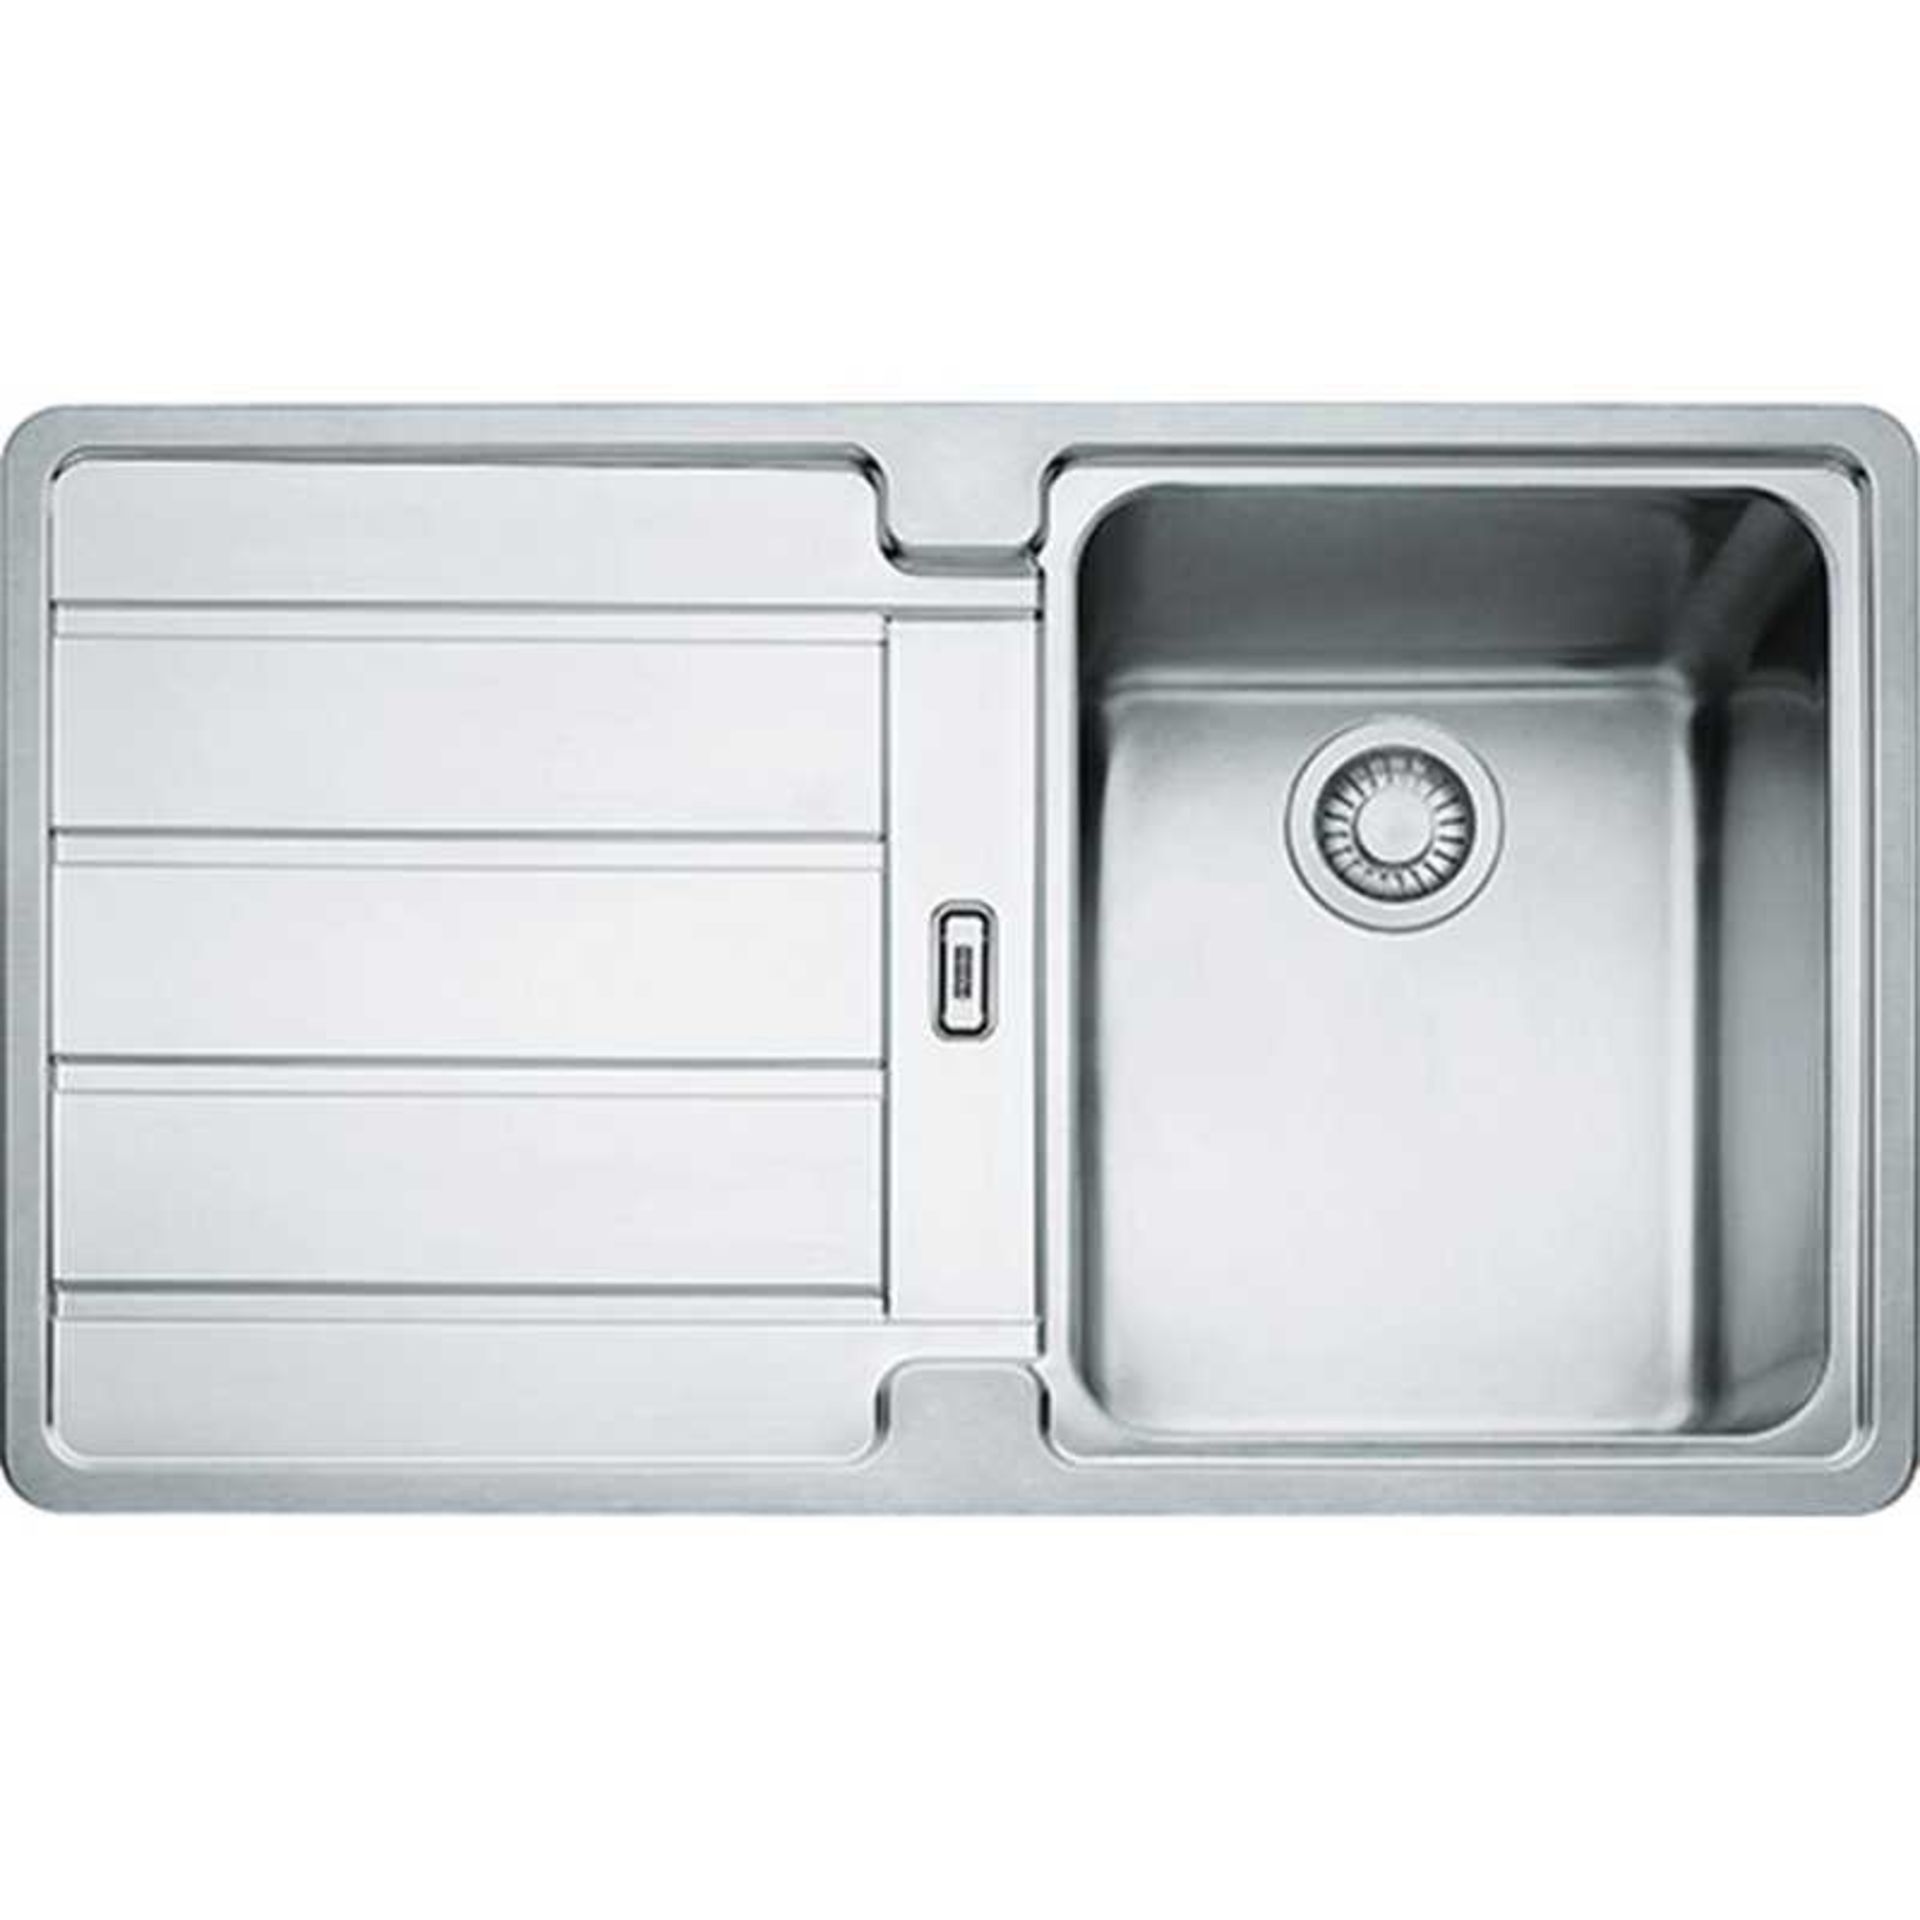 Boxed Brand New Factory Sealed Franke Sink- Model- HDX 614 860x510mm, RRP-£300.00